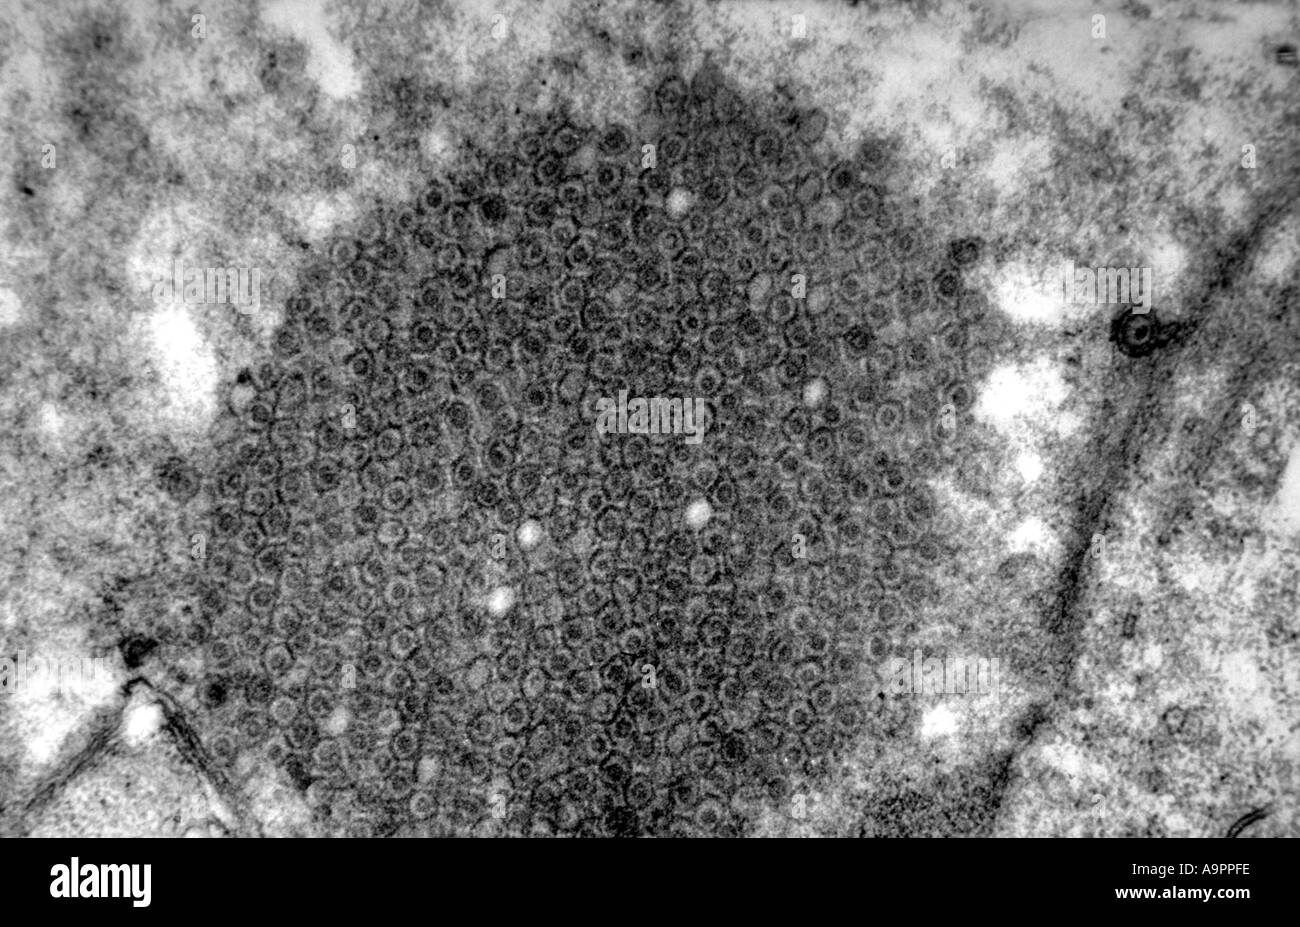 Photomicrograph herpes simplex x73000 Stock Photo - Alamy